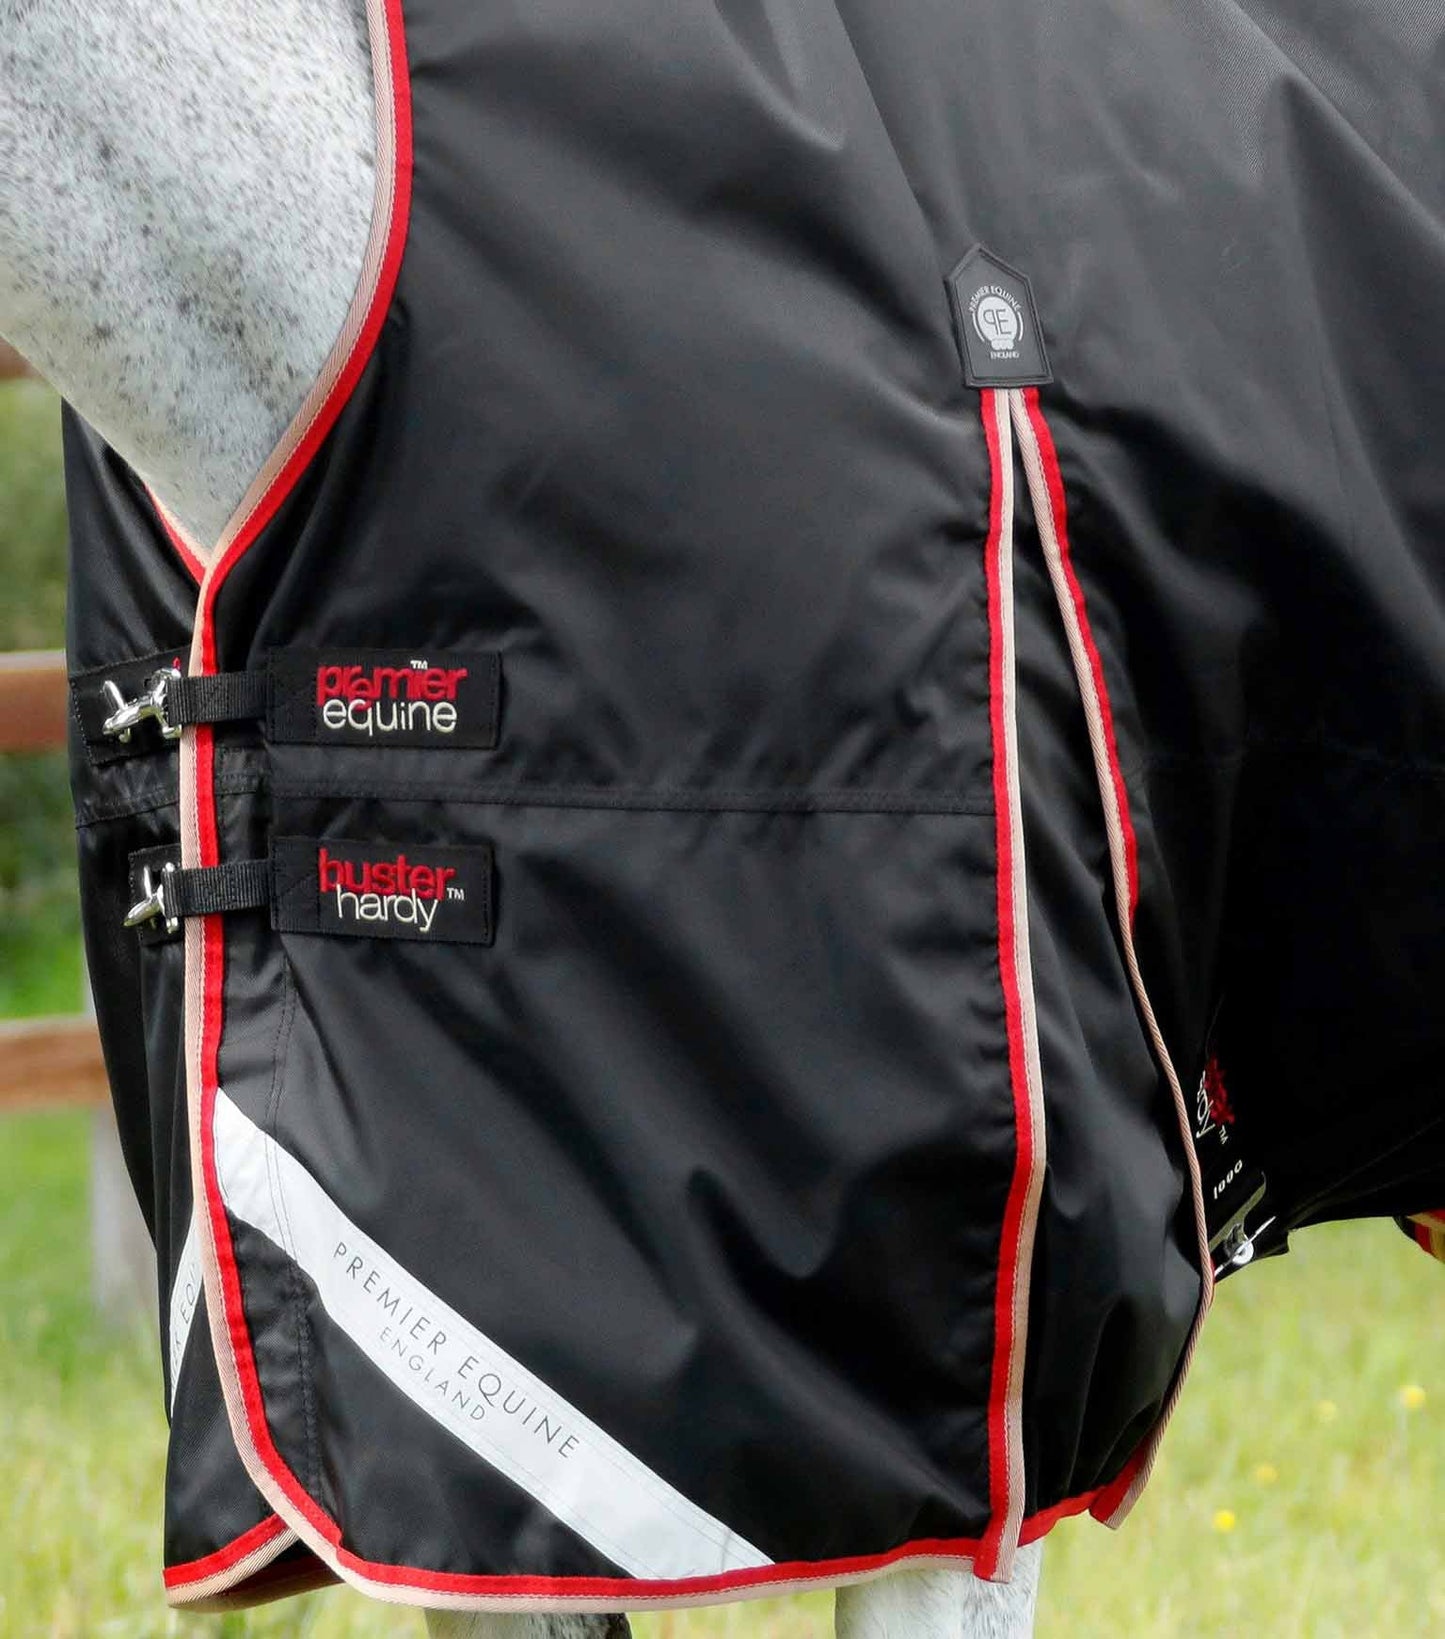 Couverture imperméable, Buster Hardy 100gr, High neck - Premier Equine